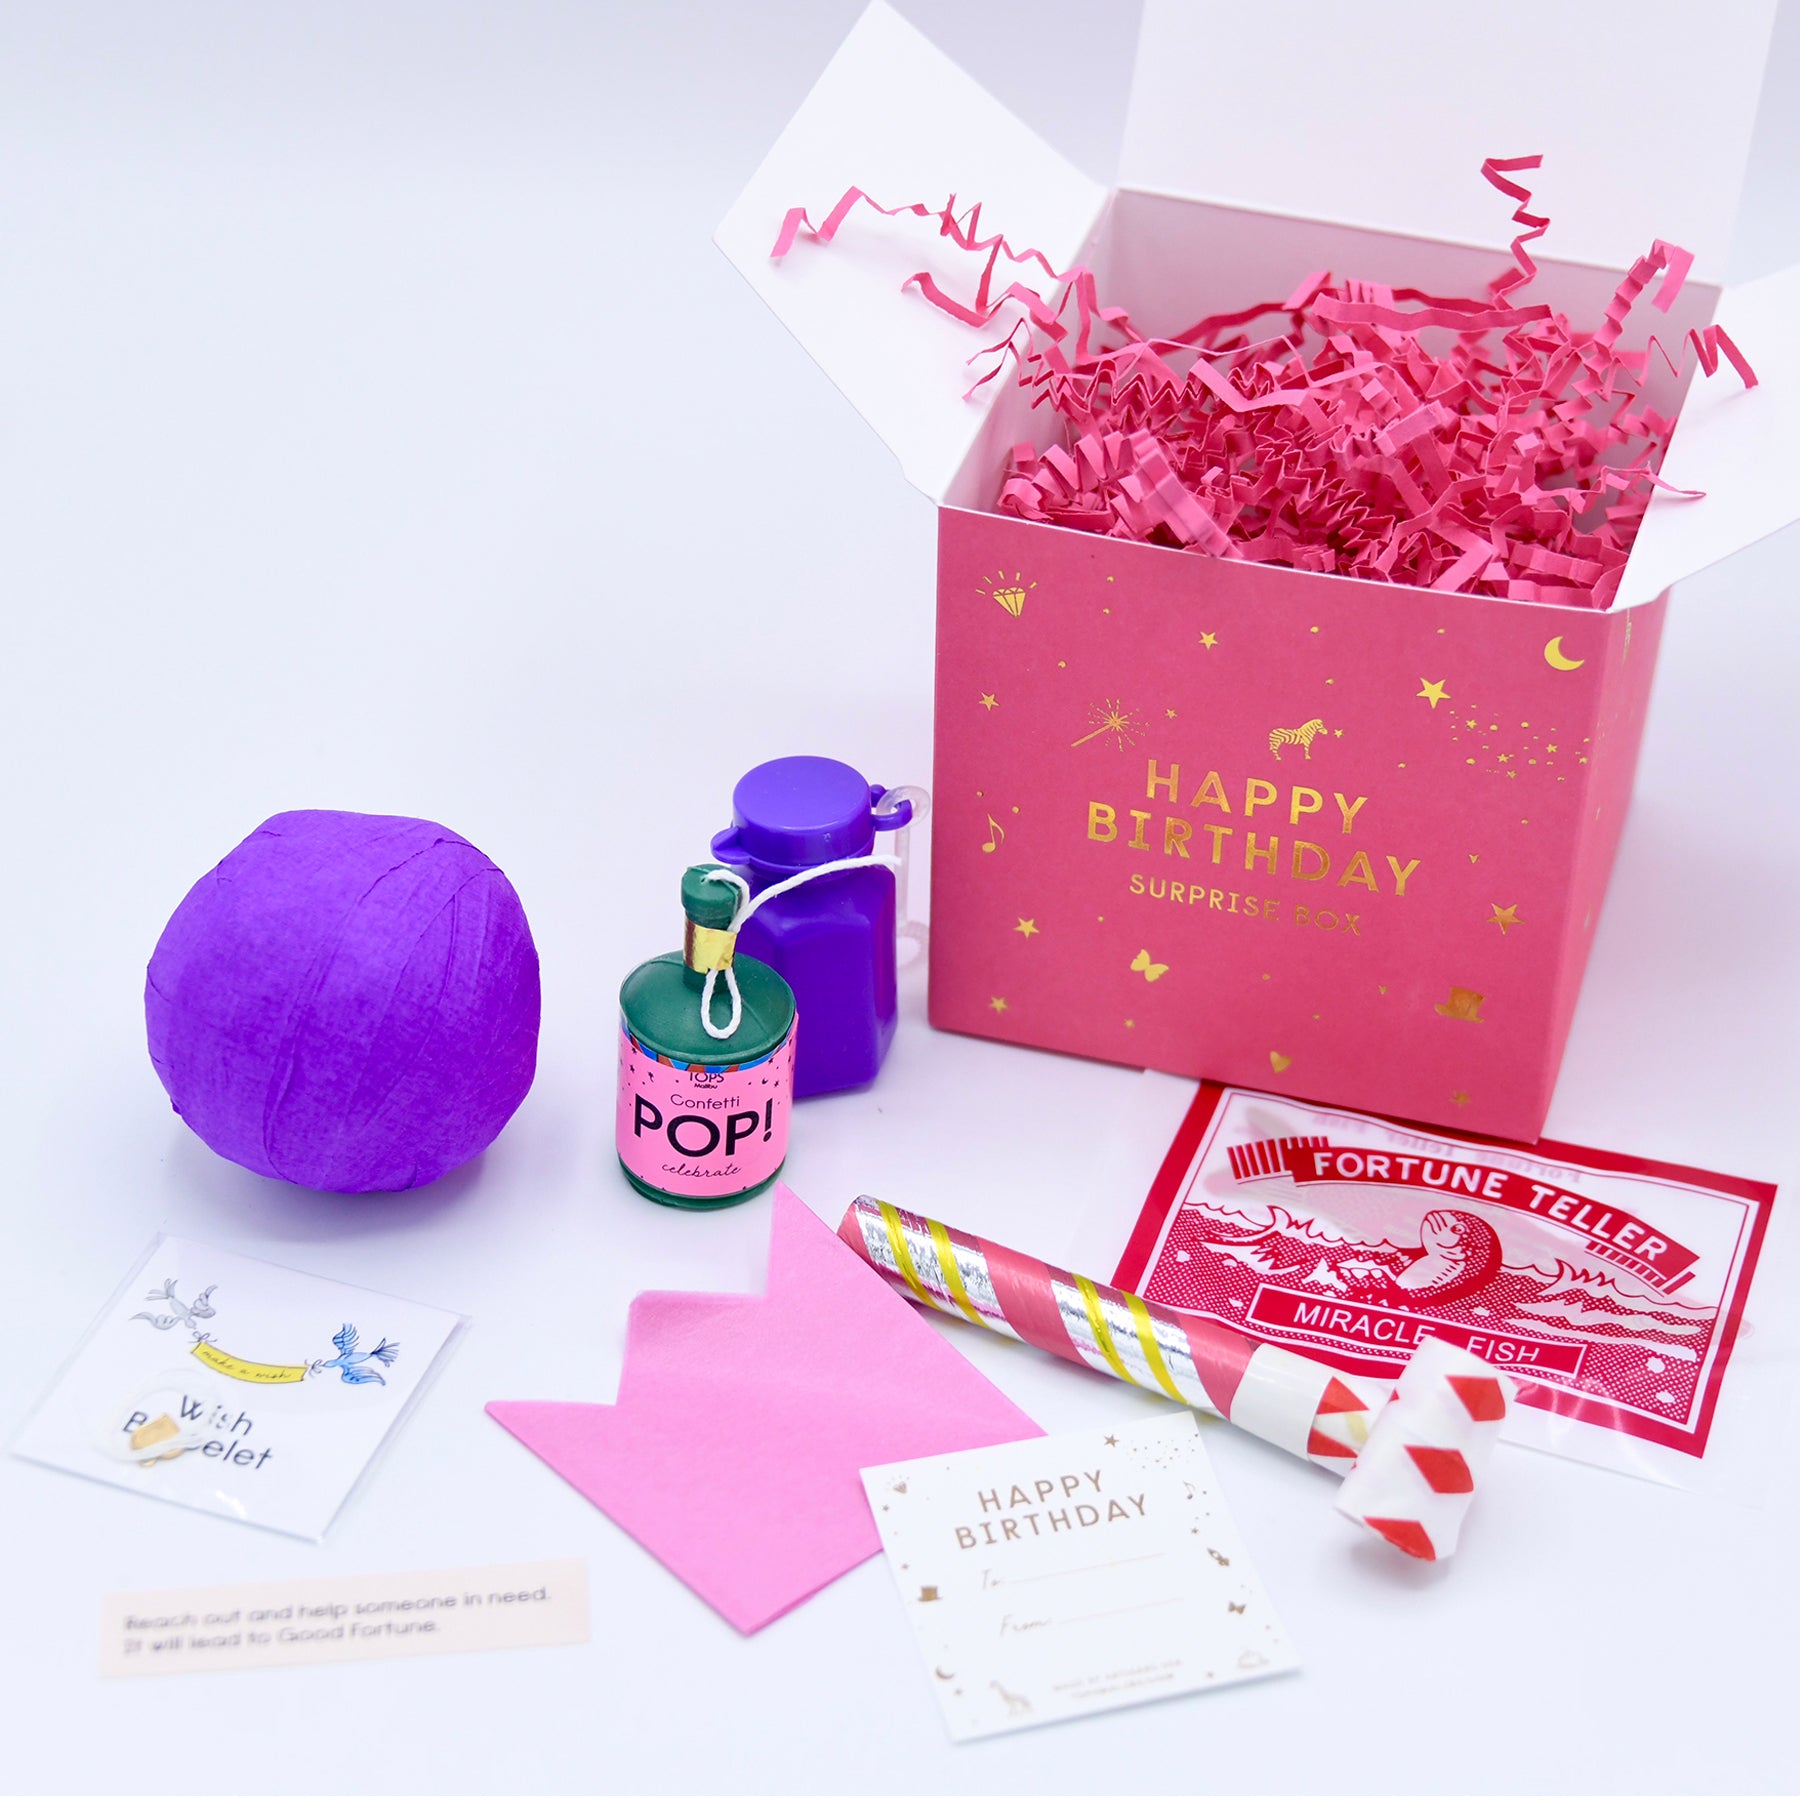 Birthday Surprise Ideas - Virgin Experience Gifts Blog